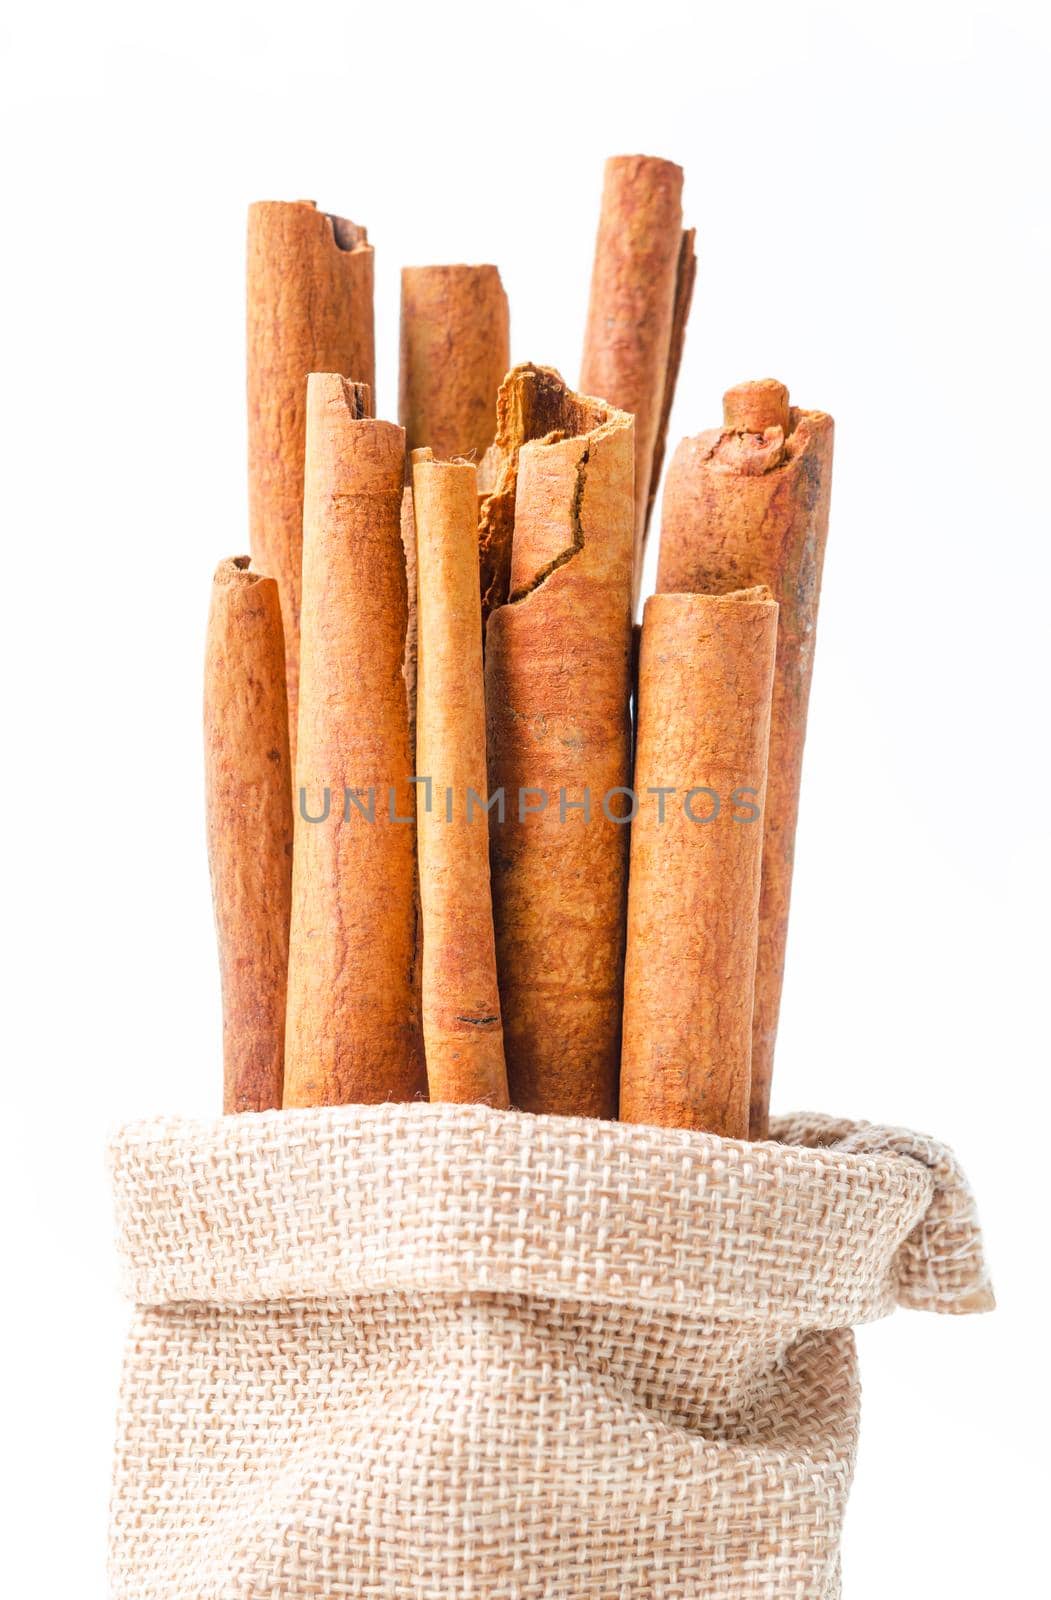 Cinnamon sticks in sag bag on white by Gamjai